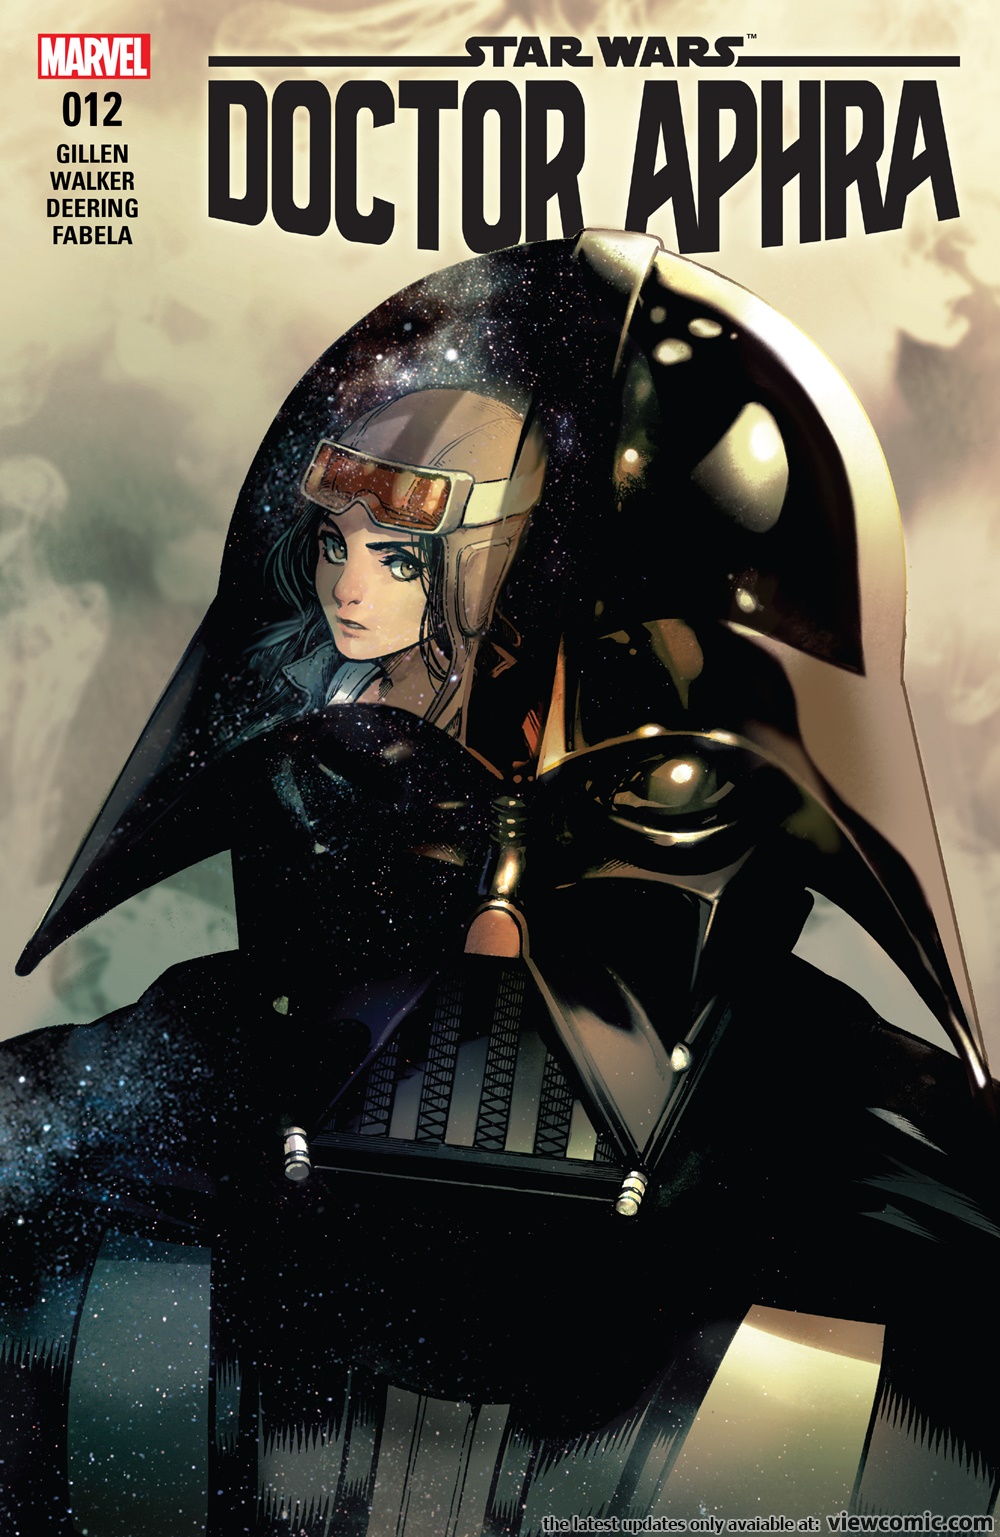 Marvel Star Wars Comics Review: Doctor Aphra #12